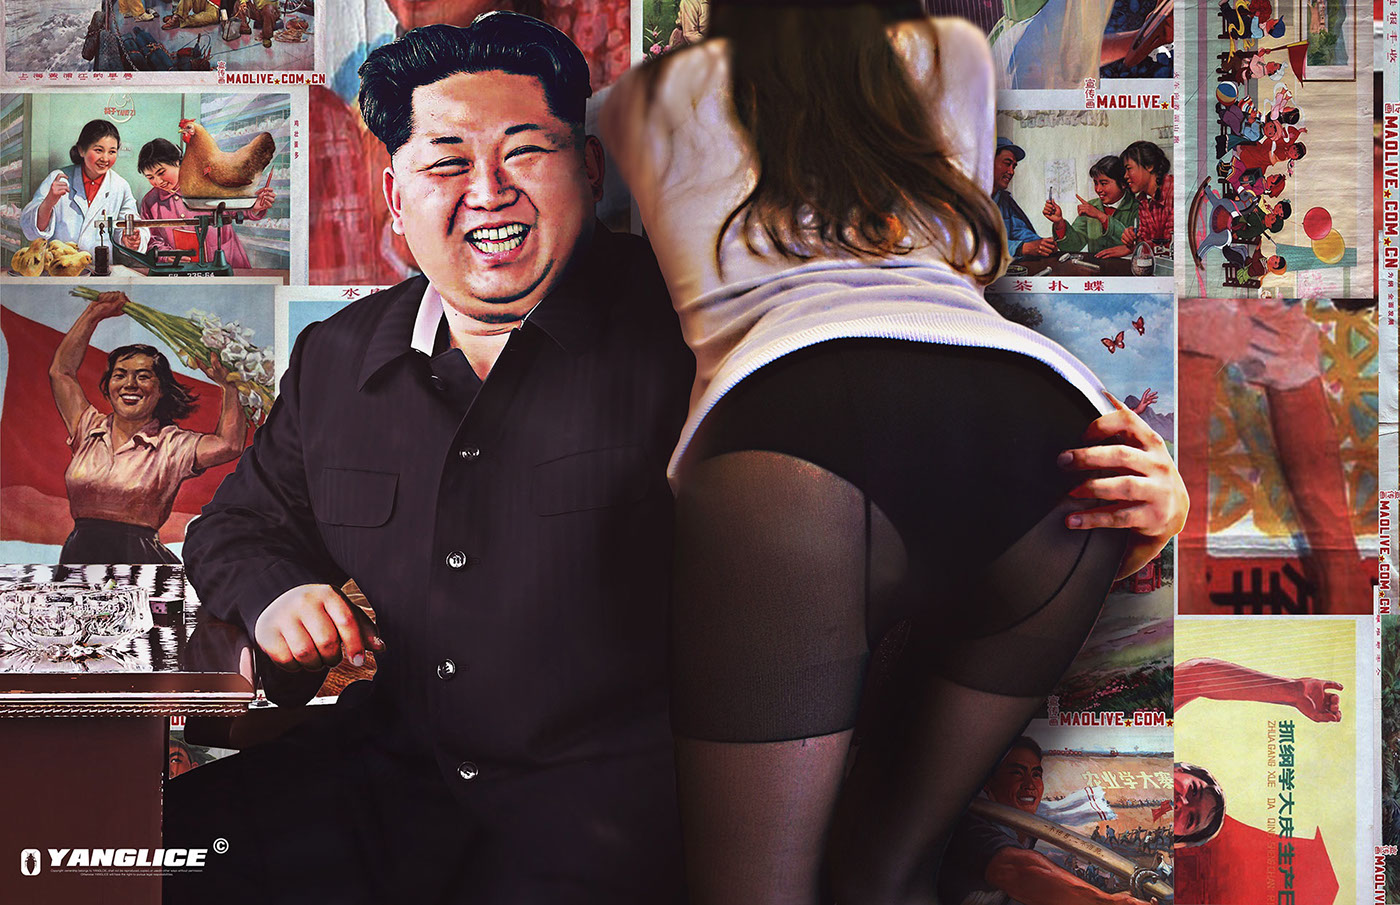 north korea socialism the design poster The President dictators happy cute sexy art